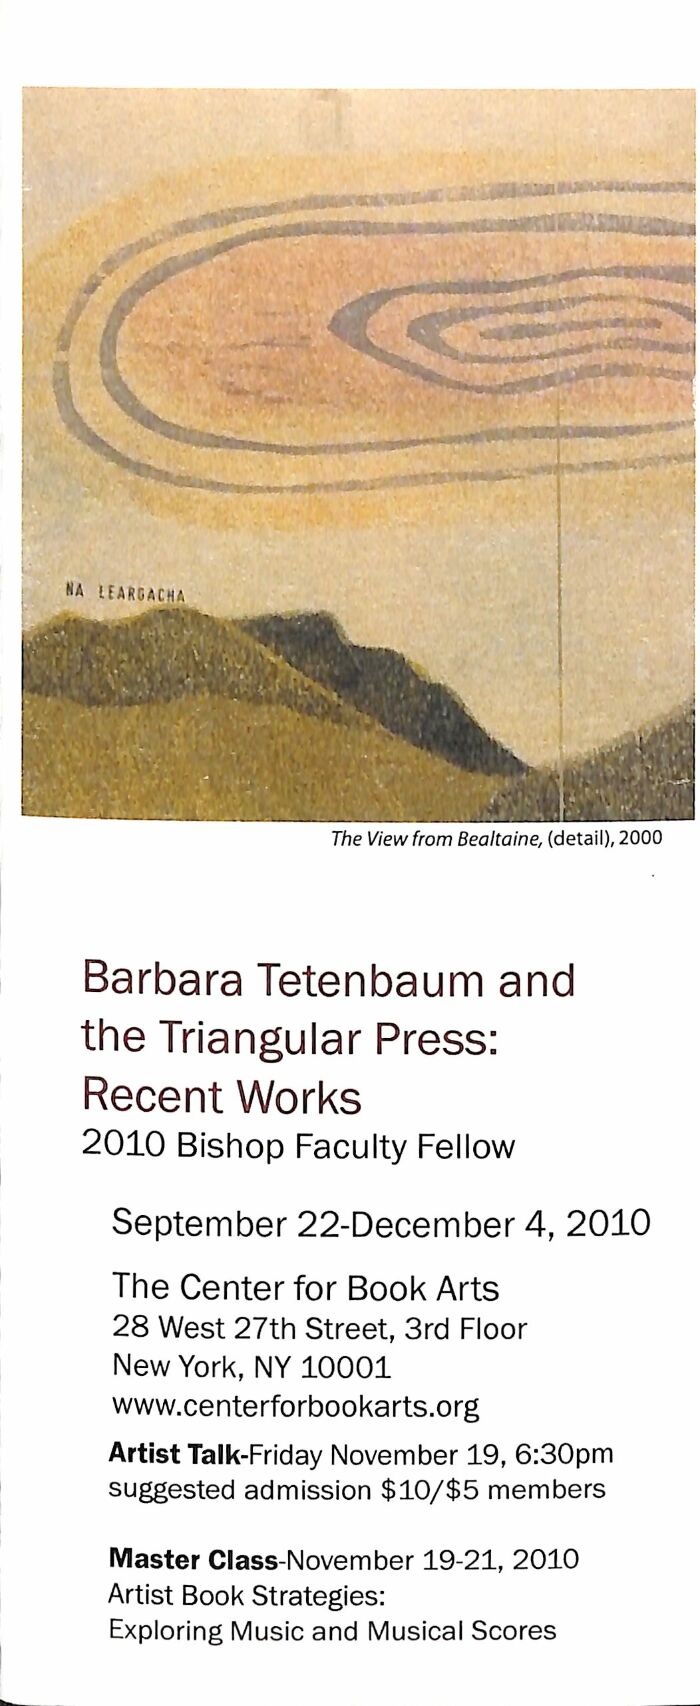 [Exhibition brochure for "Barbara Tetenbaum and the Triangular Press: Recent Works"]
